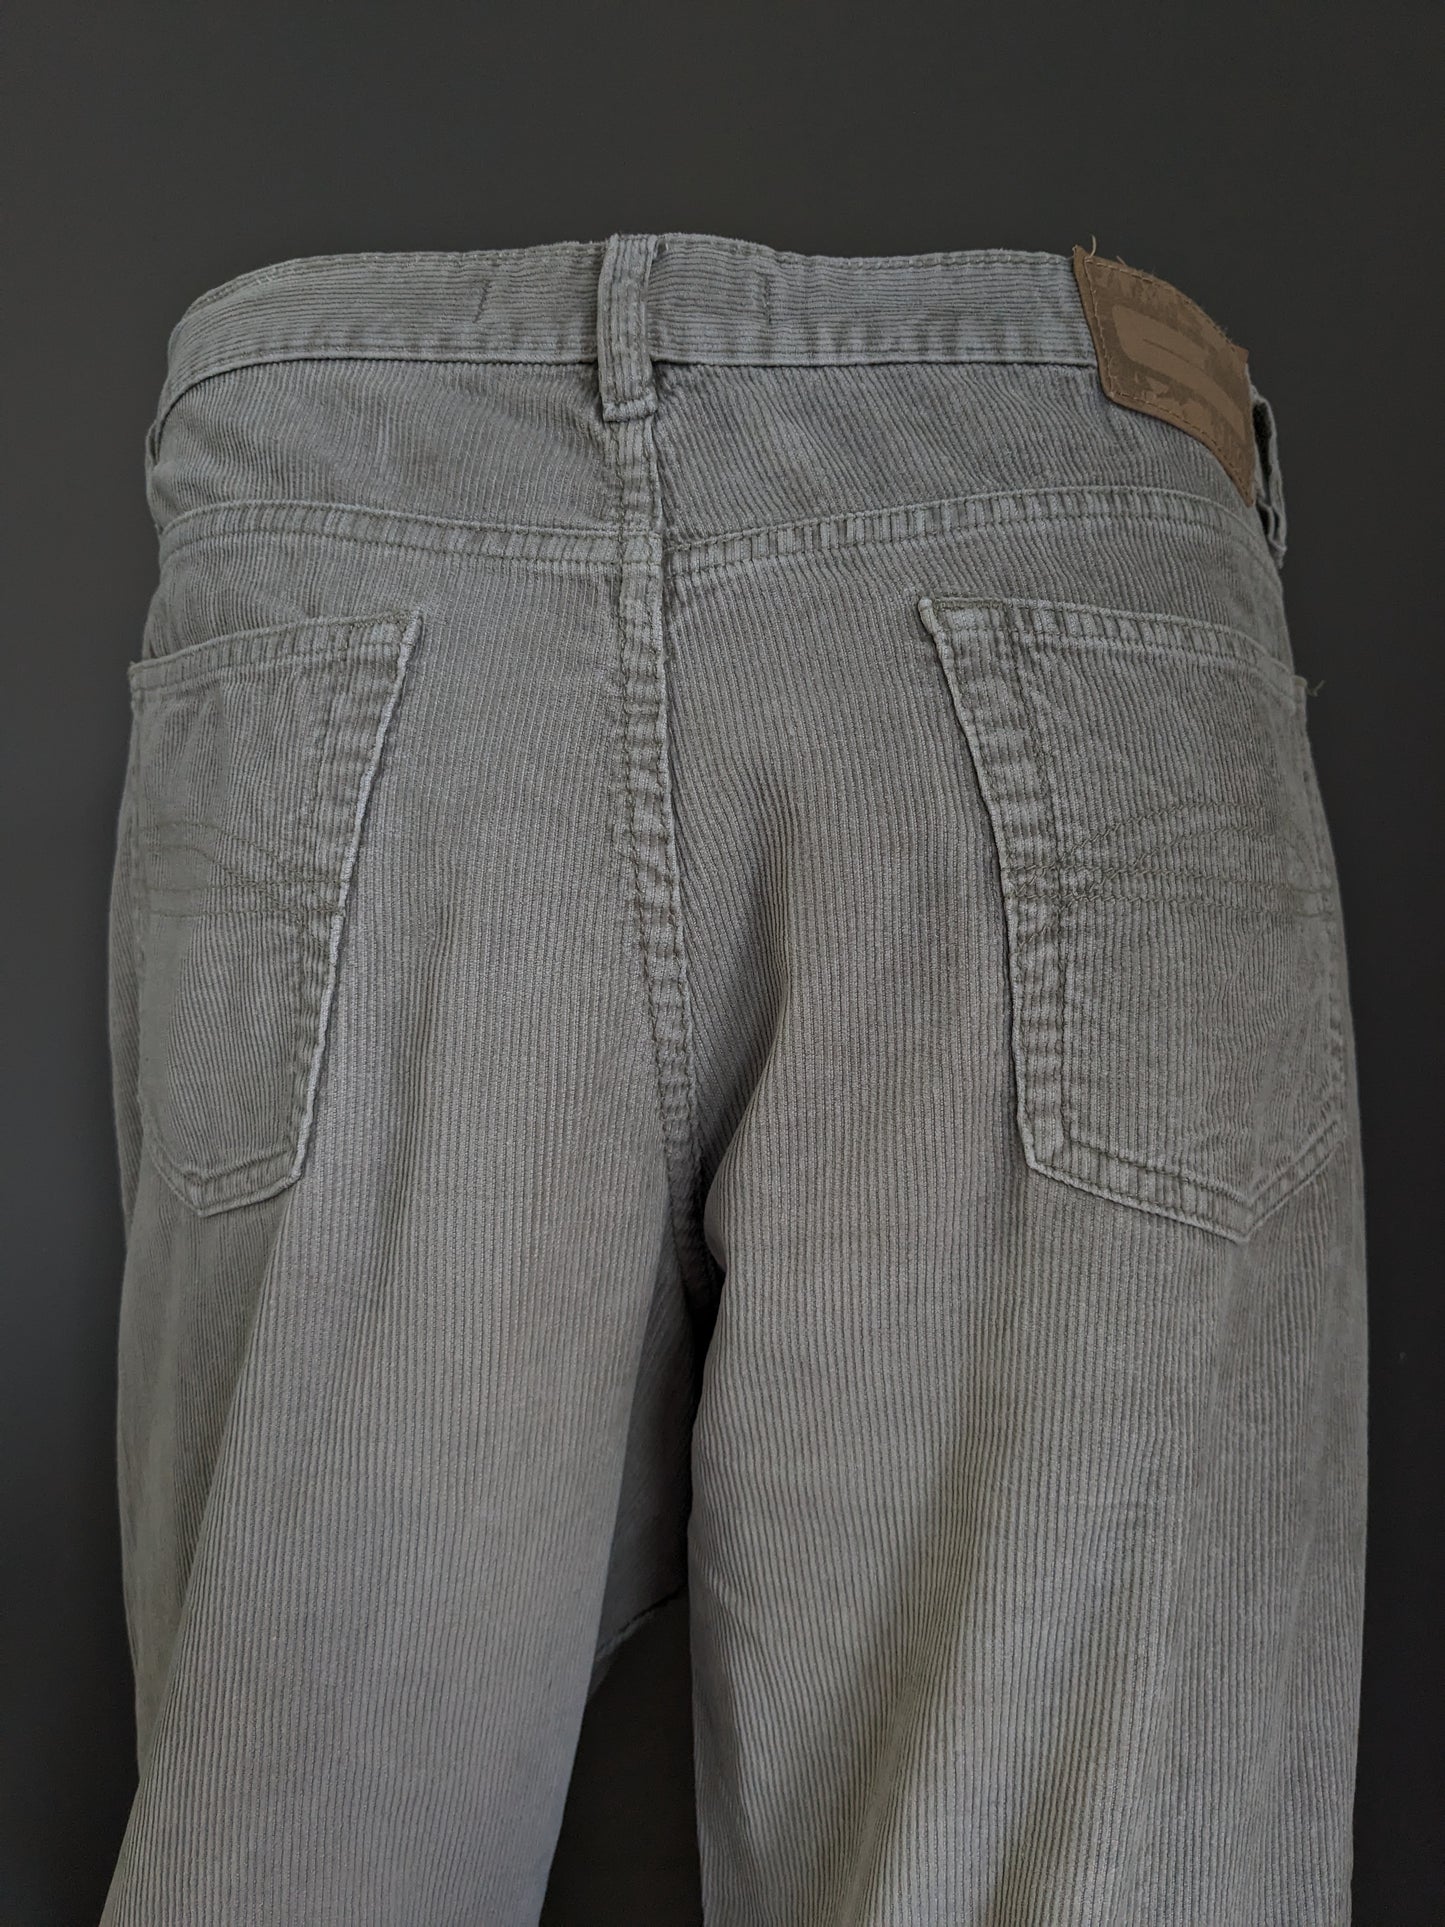 Vintage canor rib pants. Beige. Size W34 - L30.